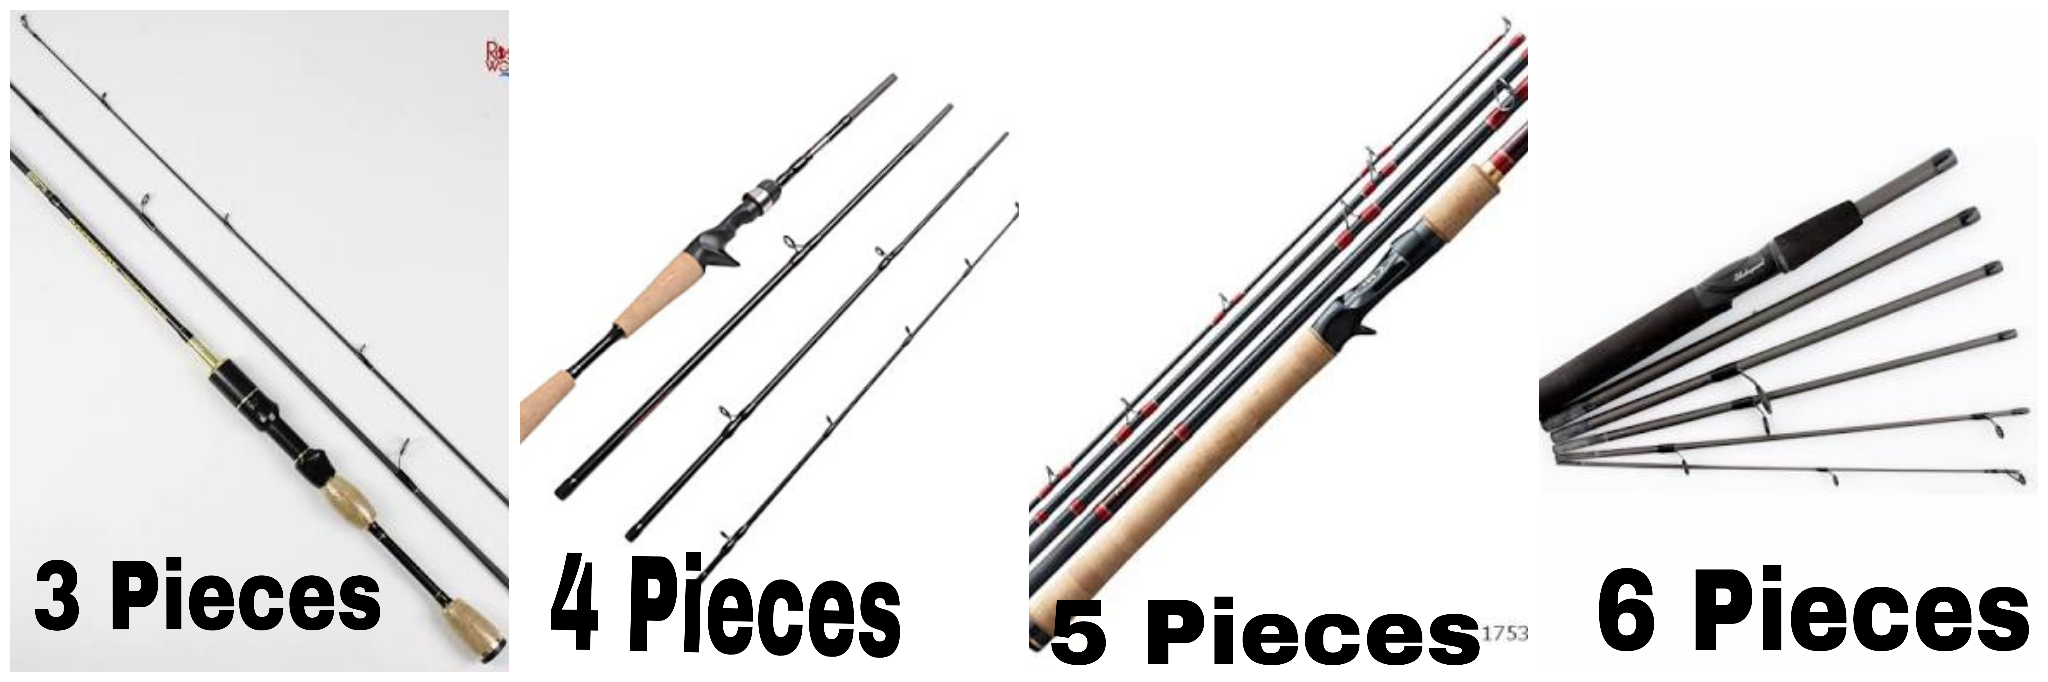 3 - 6 Pieces Travel Rod